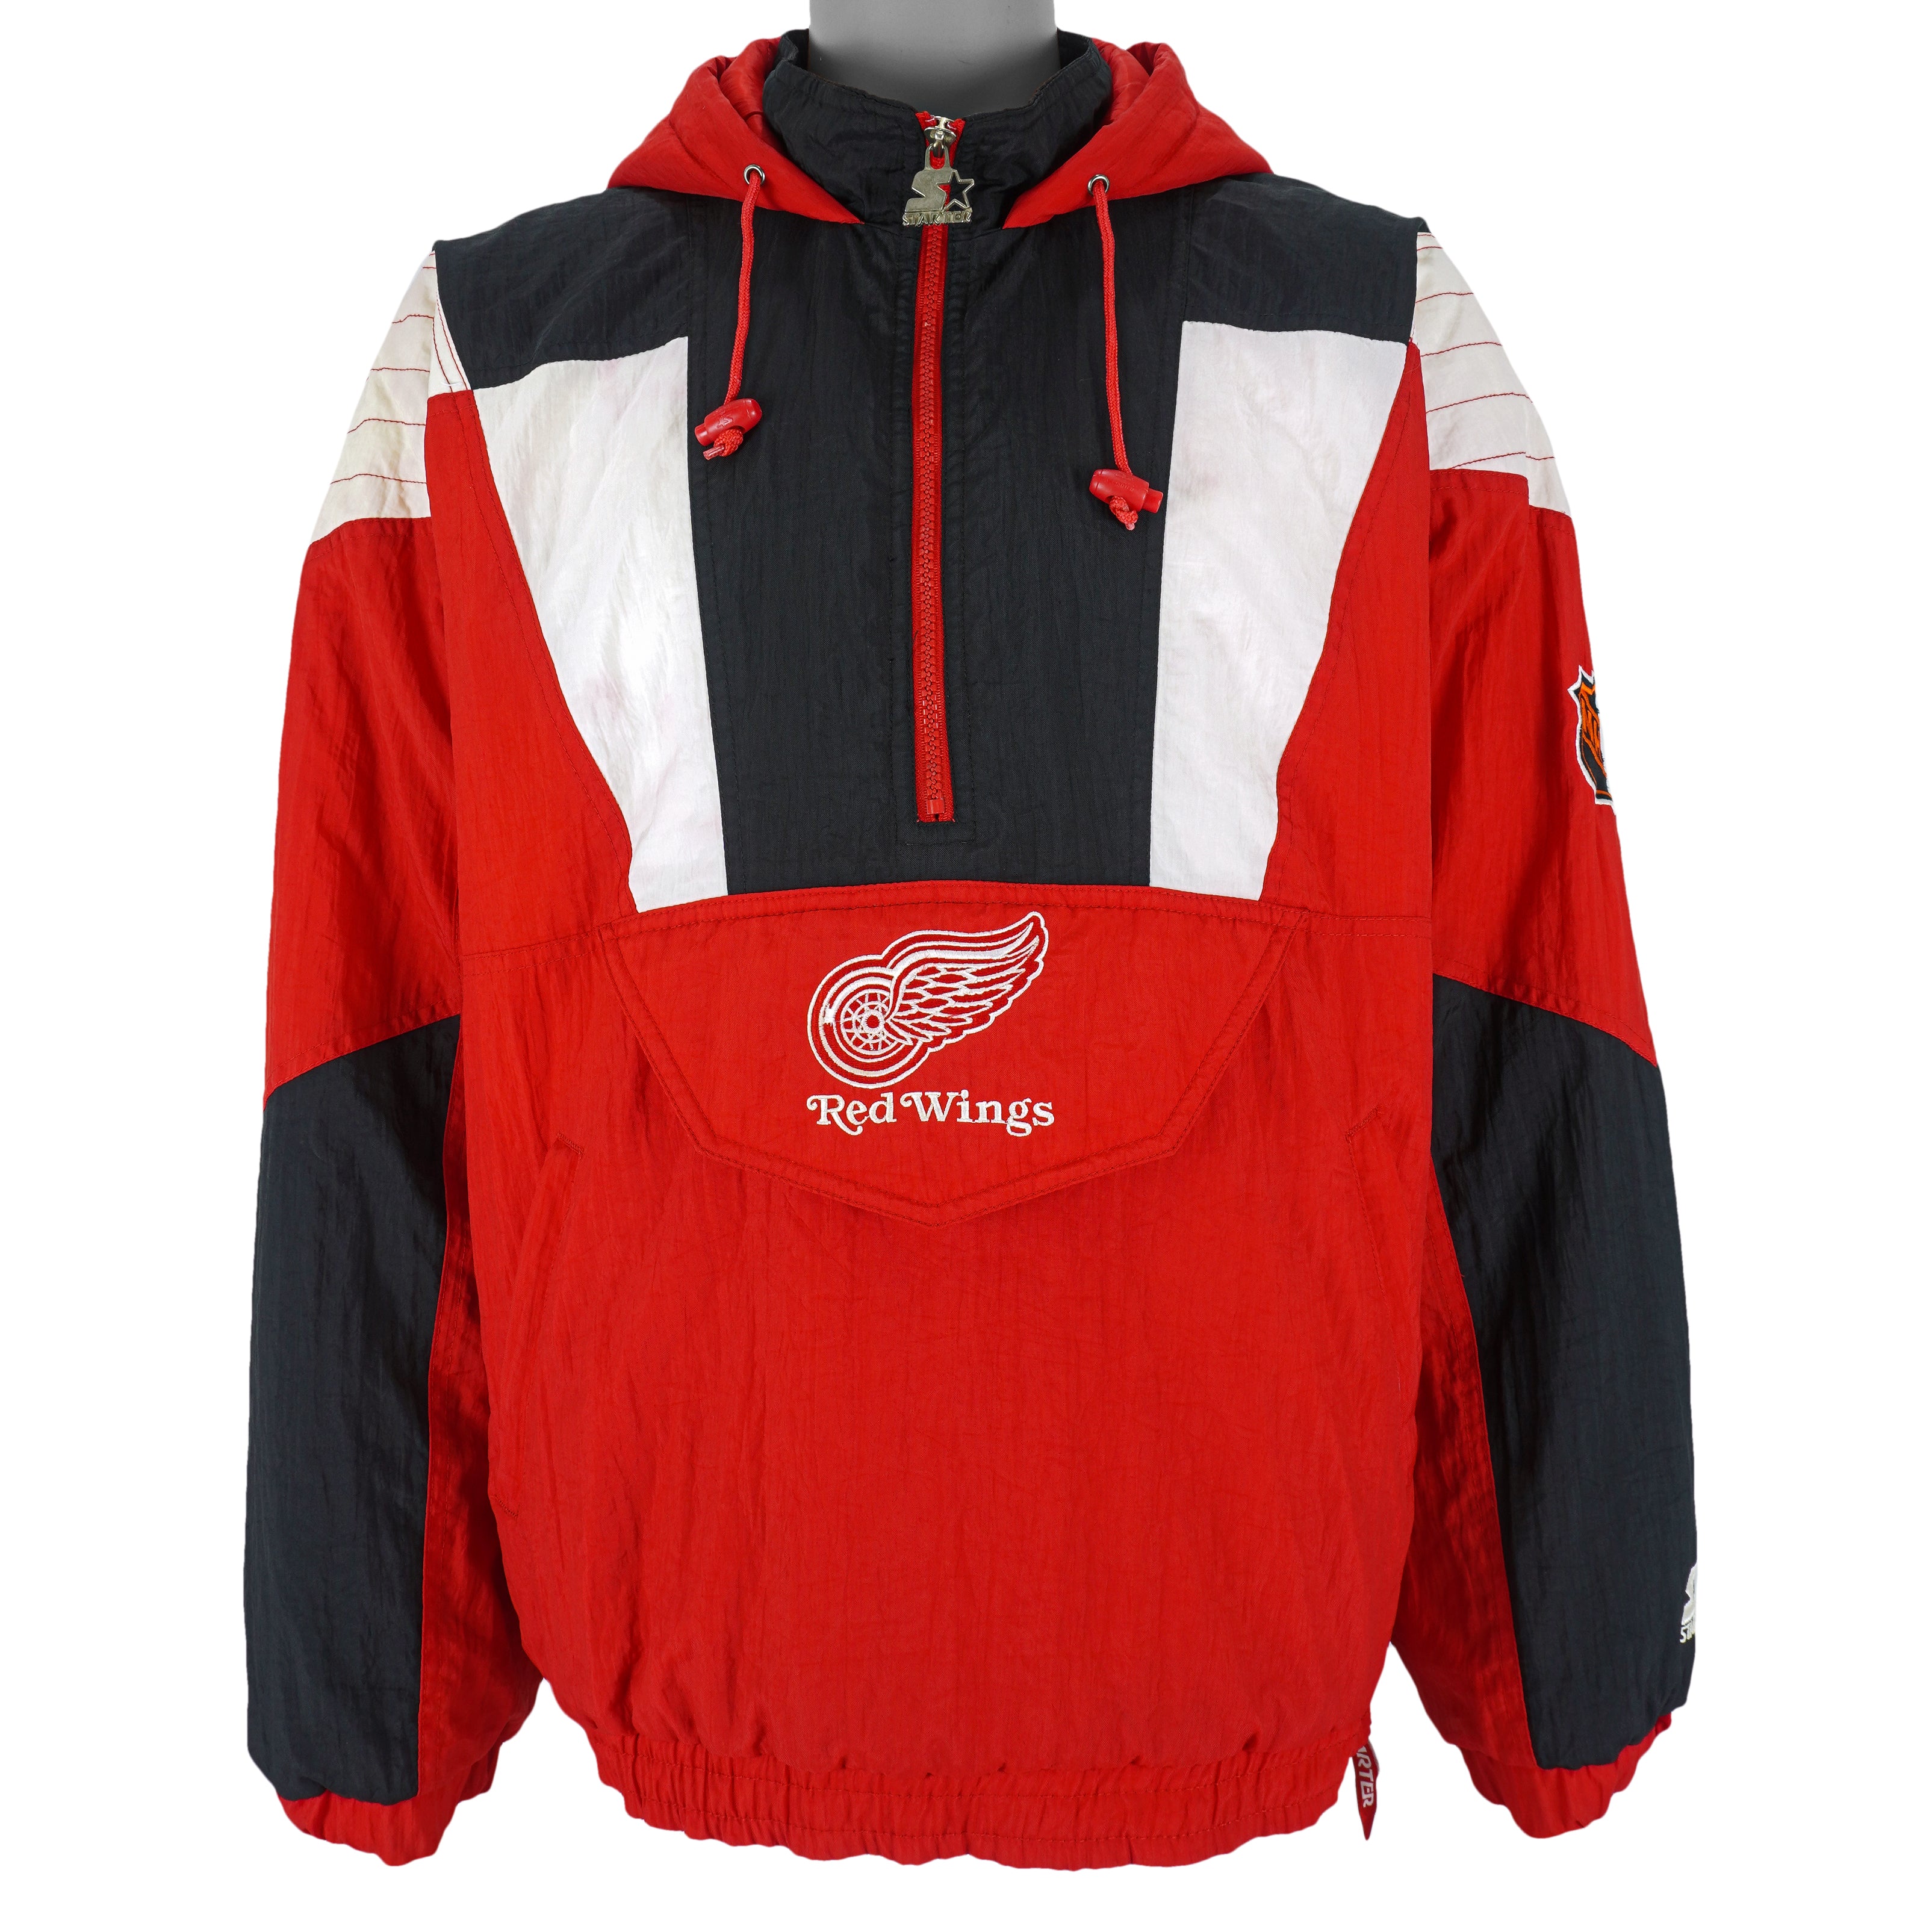 Detroit Red Wings Starter Red Satin Jacket